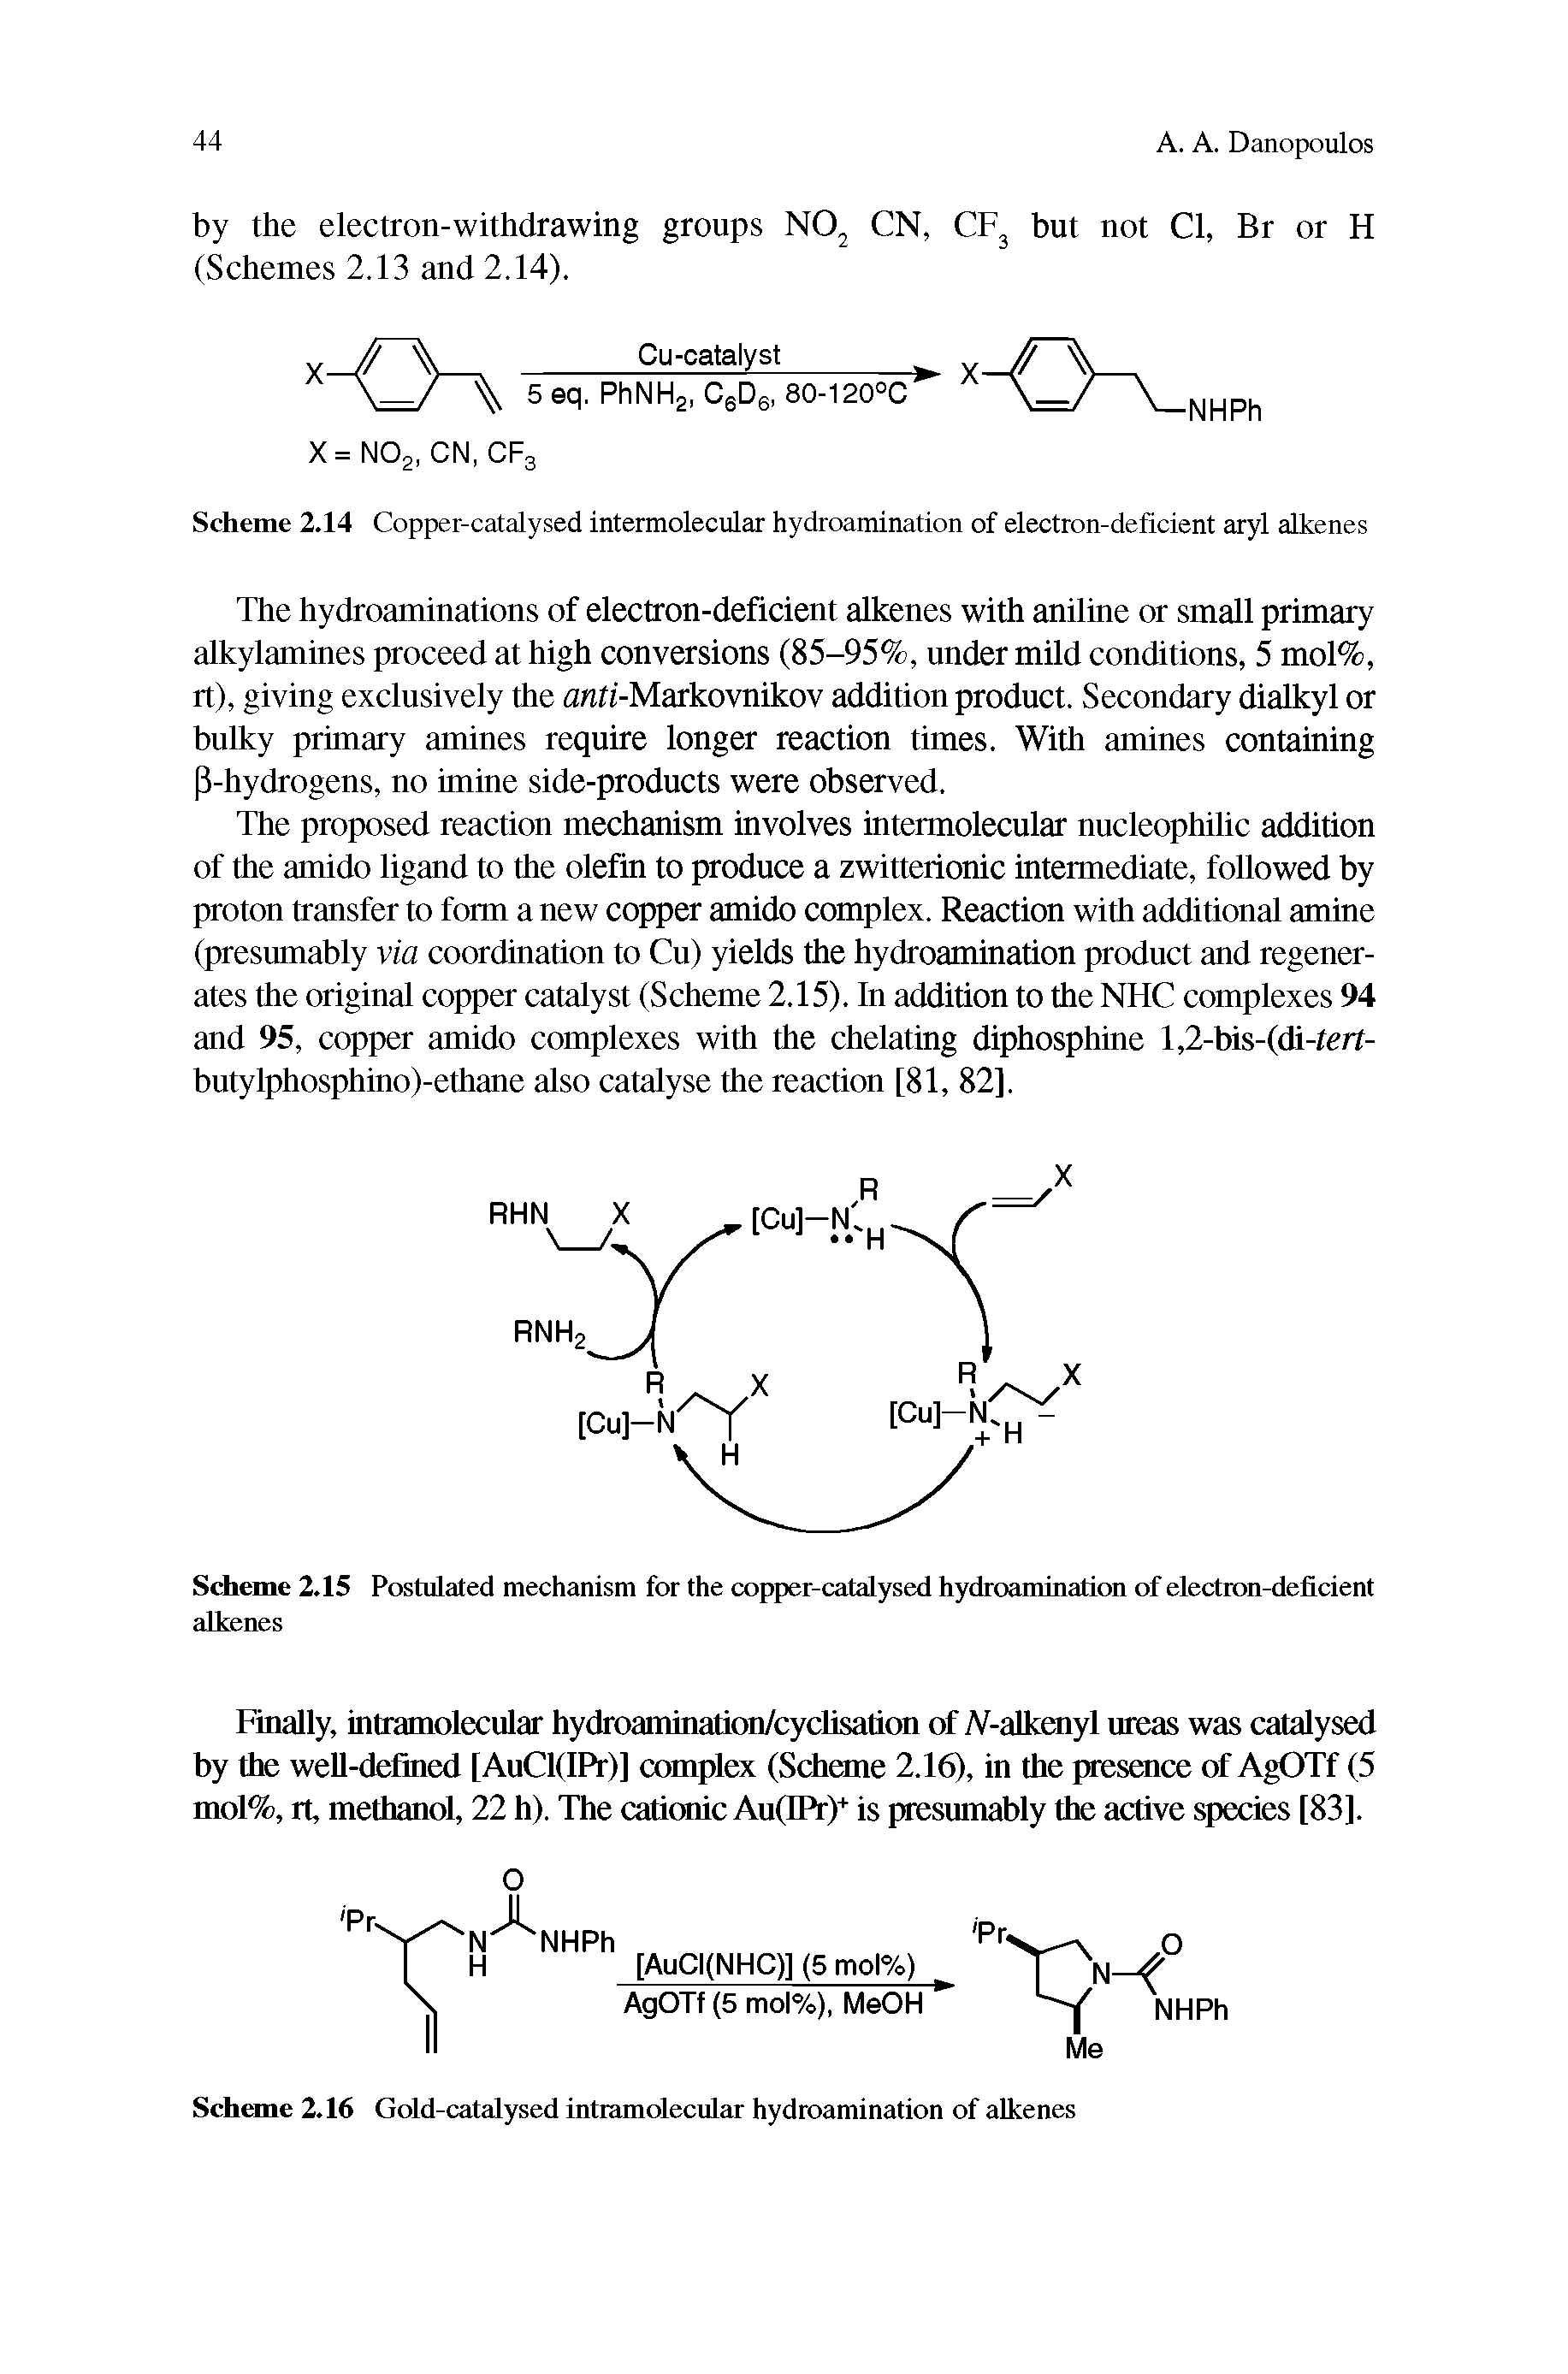 Scheme 2.16 Gold-catalysed intramolecular hydroamination of alkenes...